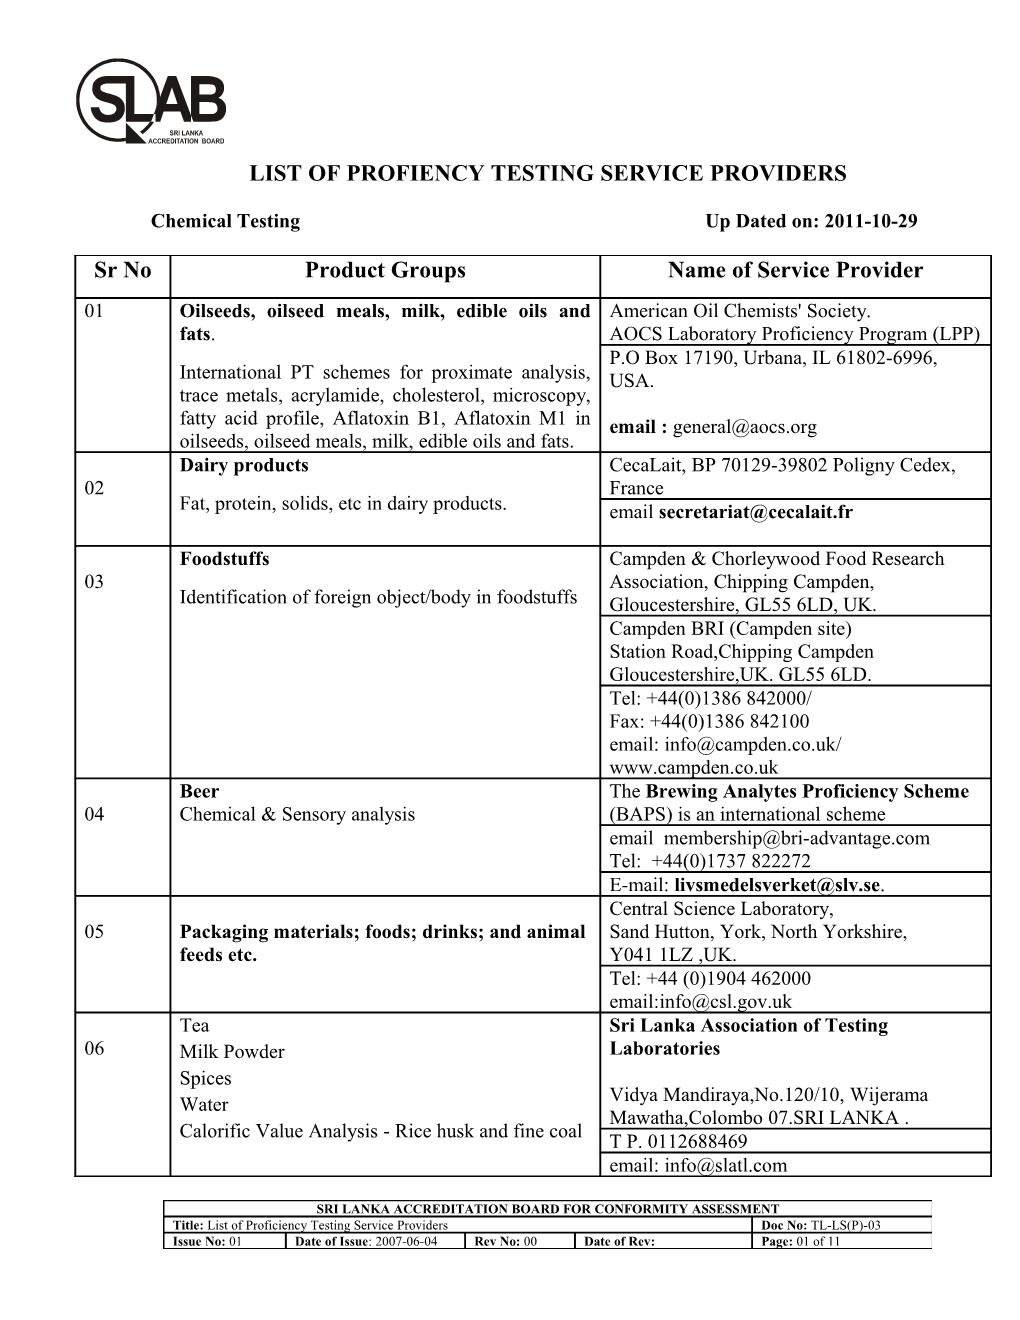 List of Profiency Testing Service Providers